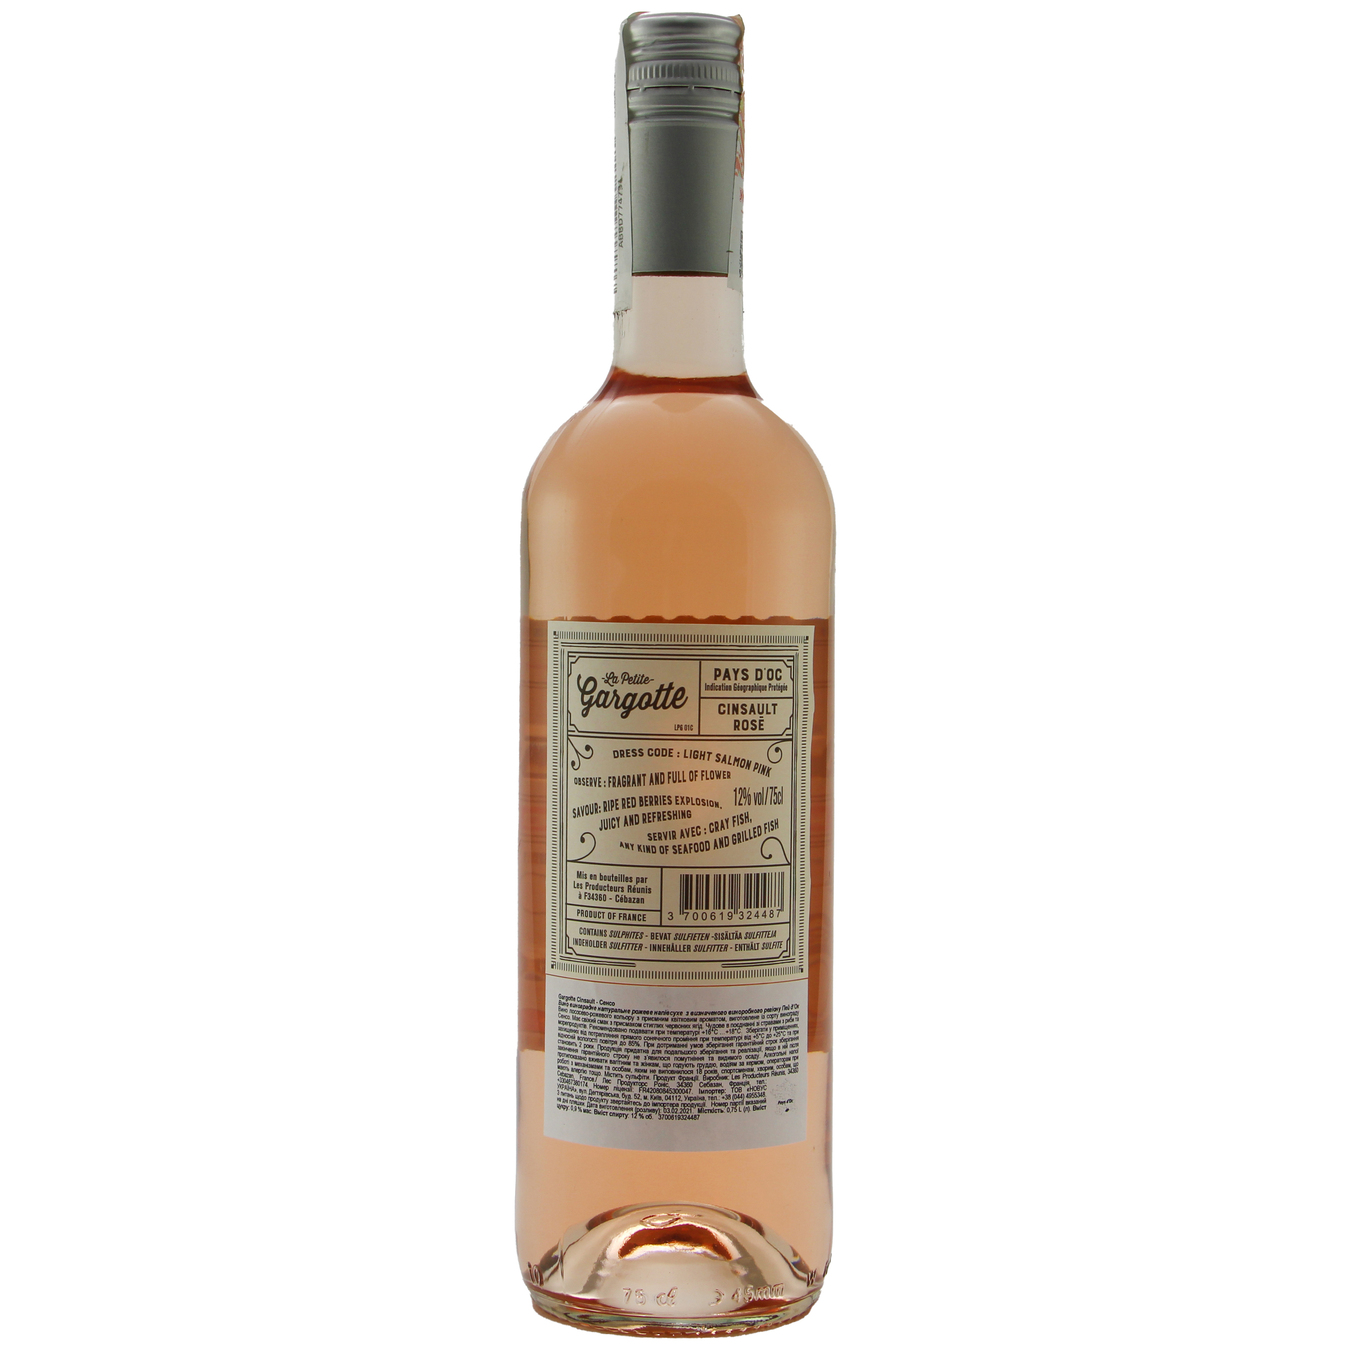 Gargotte Cinsault Rose Pays d'Oc pink semi-dry wine 12% 0,75l 2